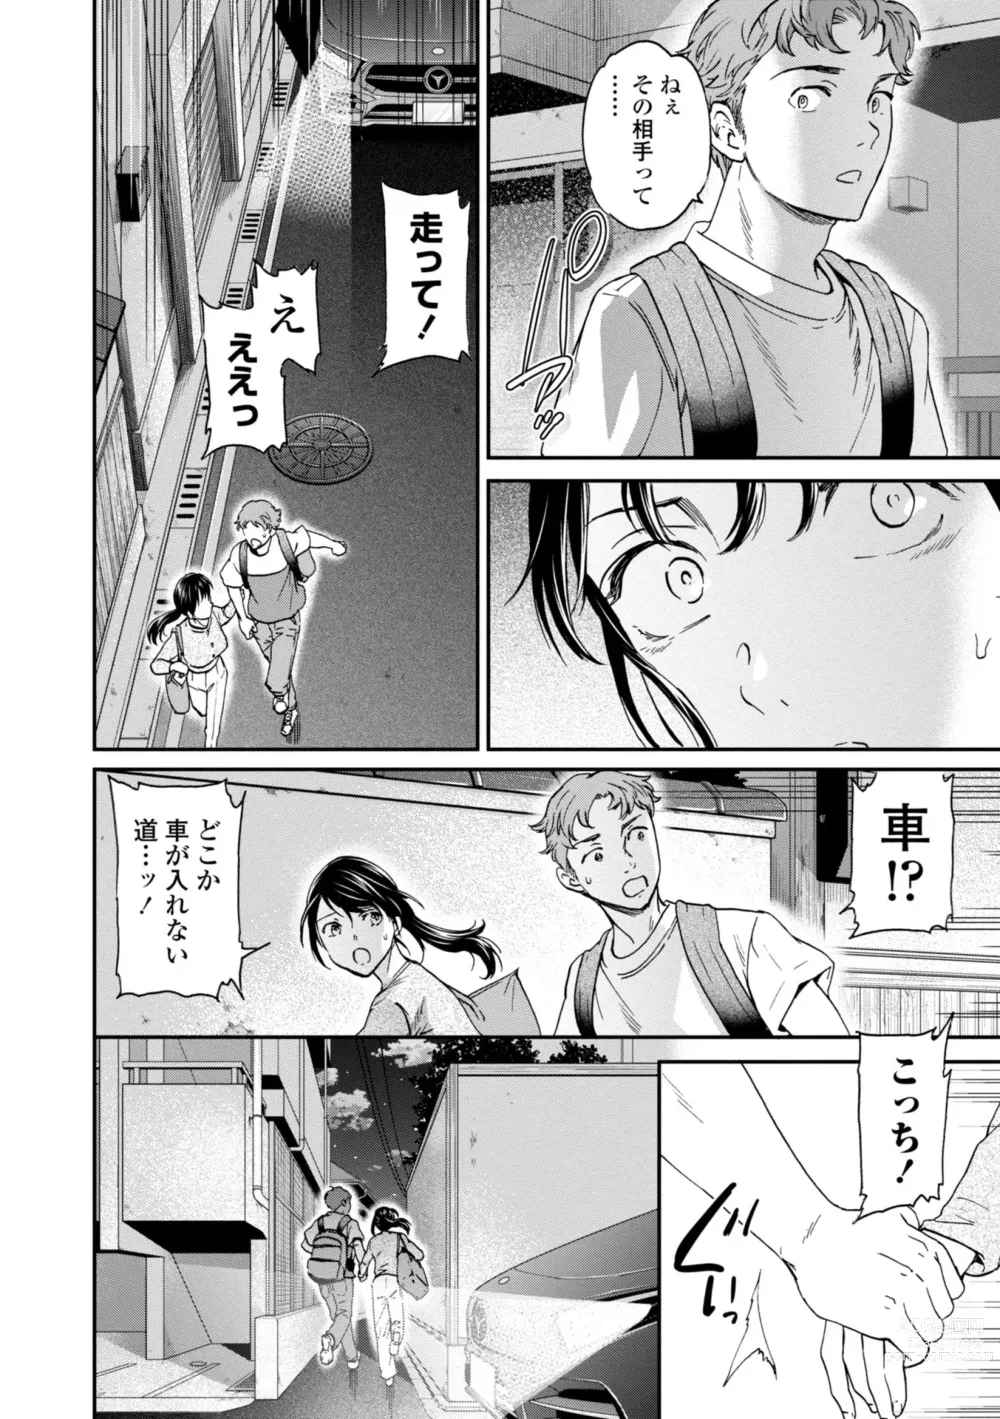 Page 32 of manga Virginity